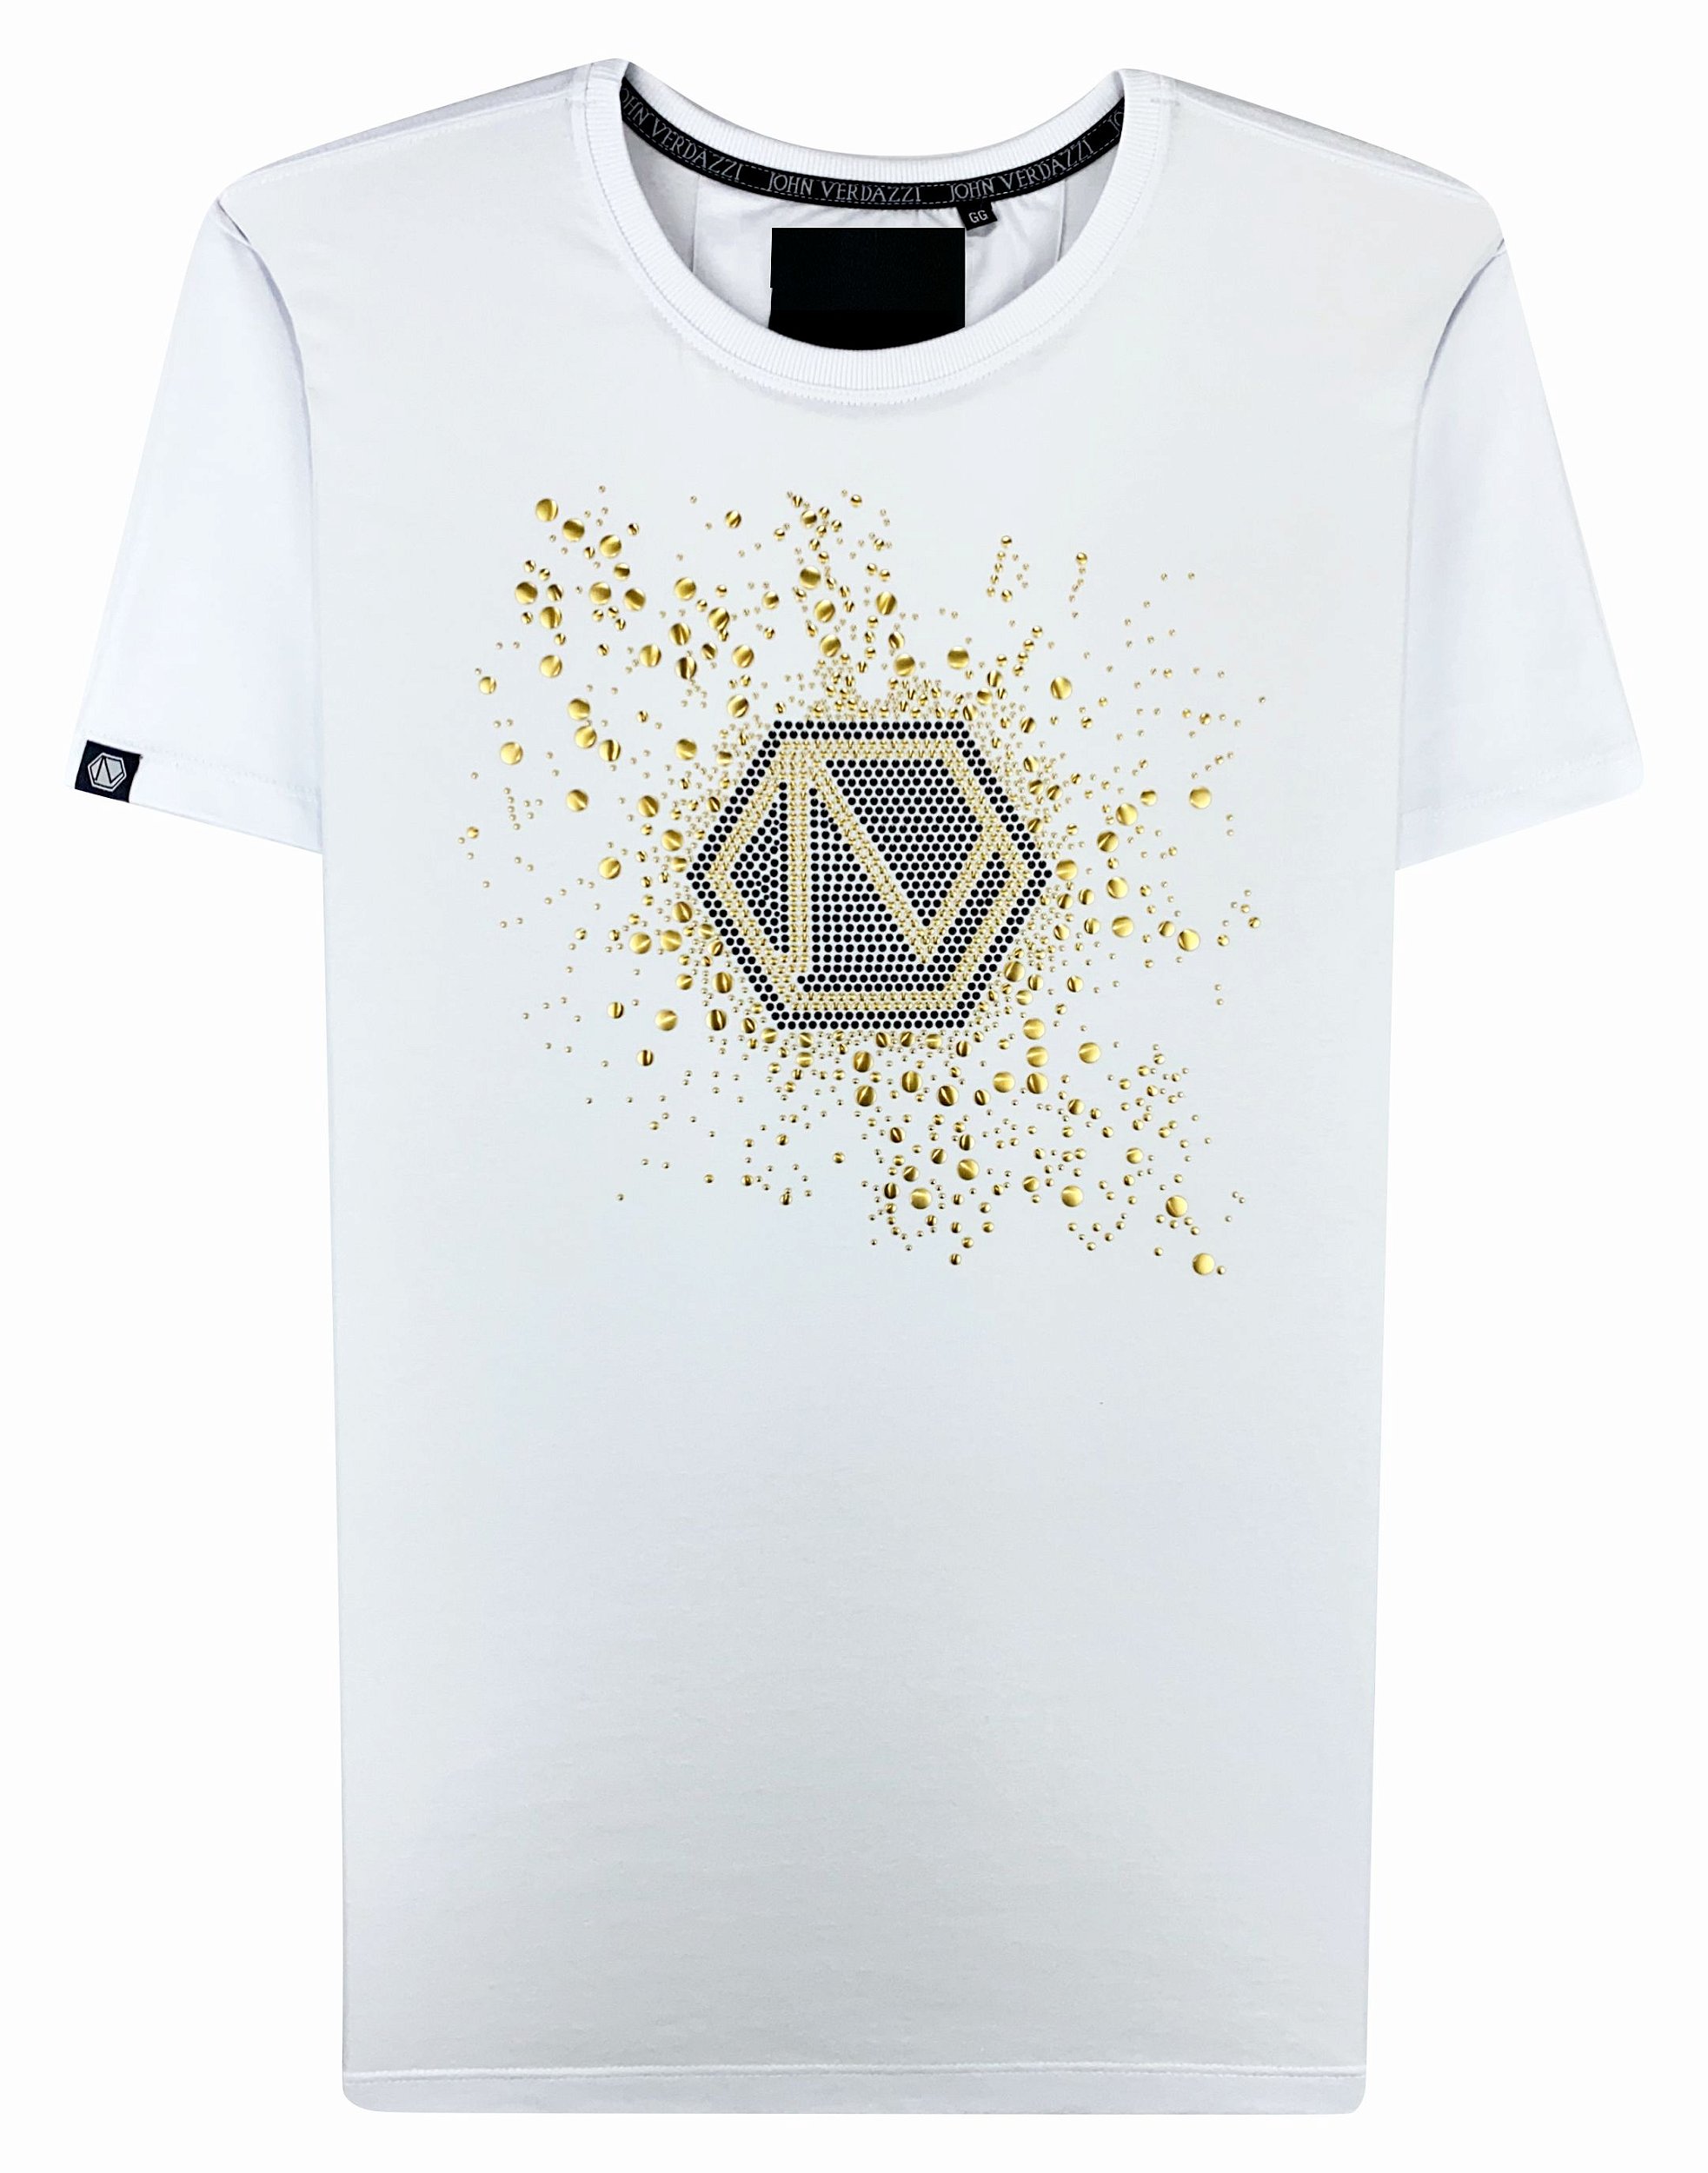 Camiseta masculina premium branca logo espirrado dourado - JOHN VERDAZZI:  The Ultimate Fashion Luxury E-Shop - Site Oficial